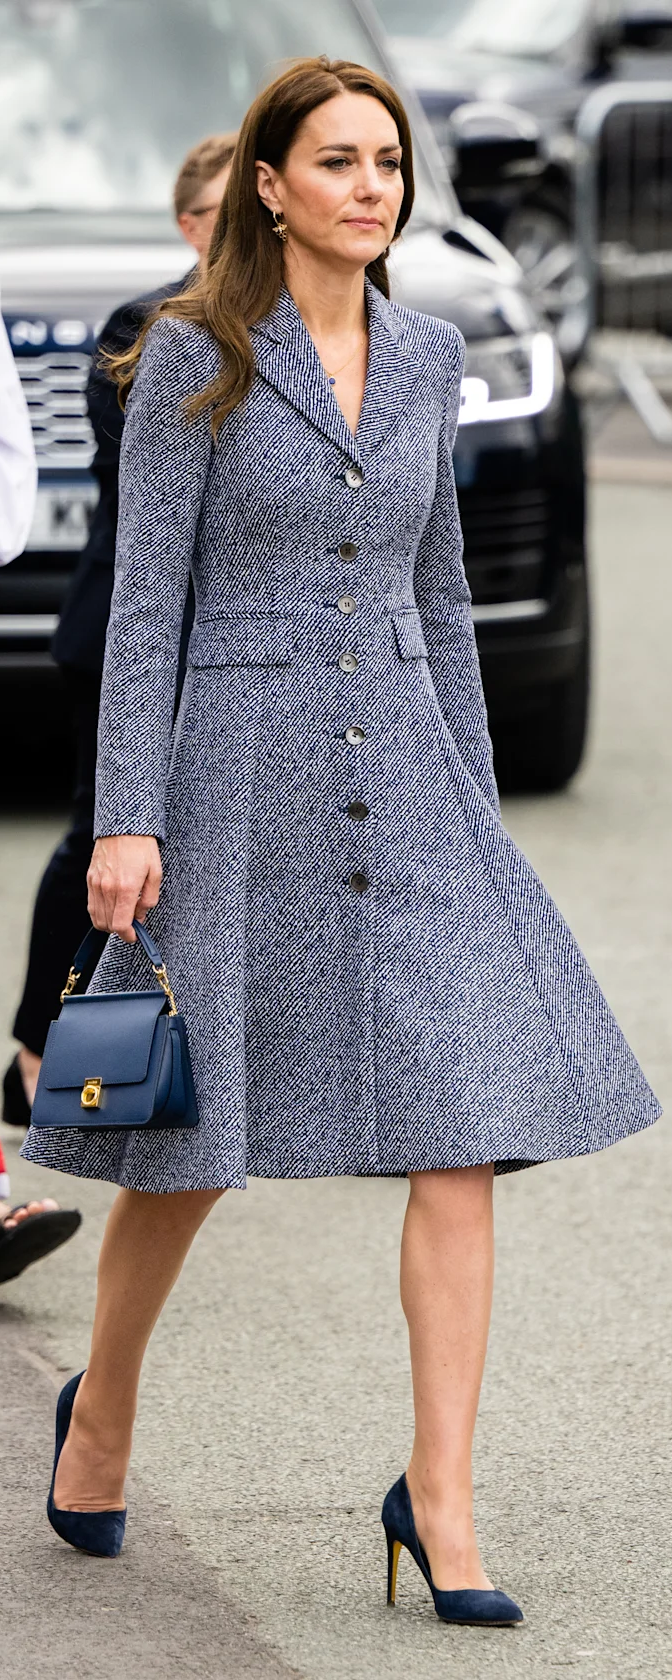 Polène Paris No 7 Mini Bag in Blue Grain Leather - Kate Middleton Bags -  Kate's Closet